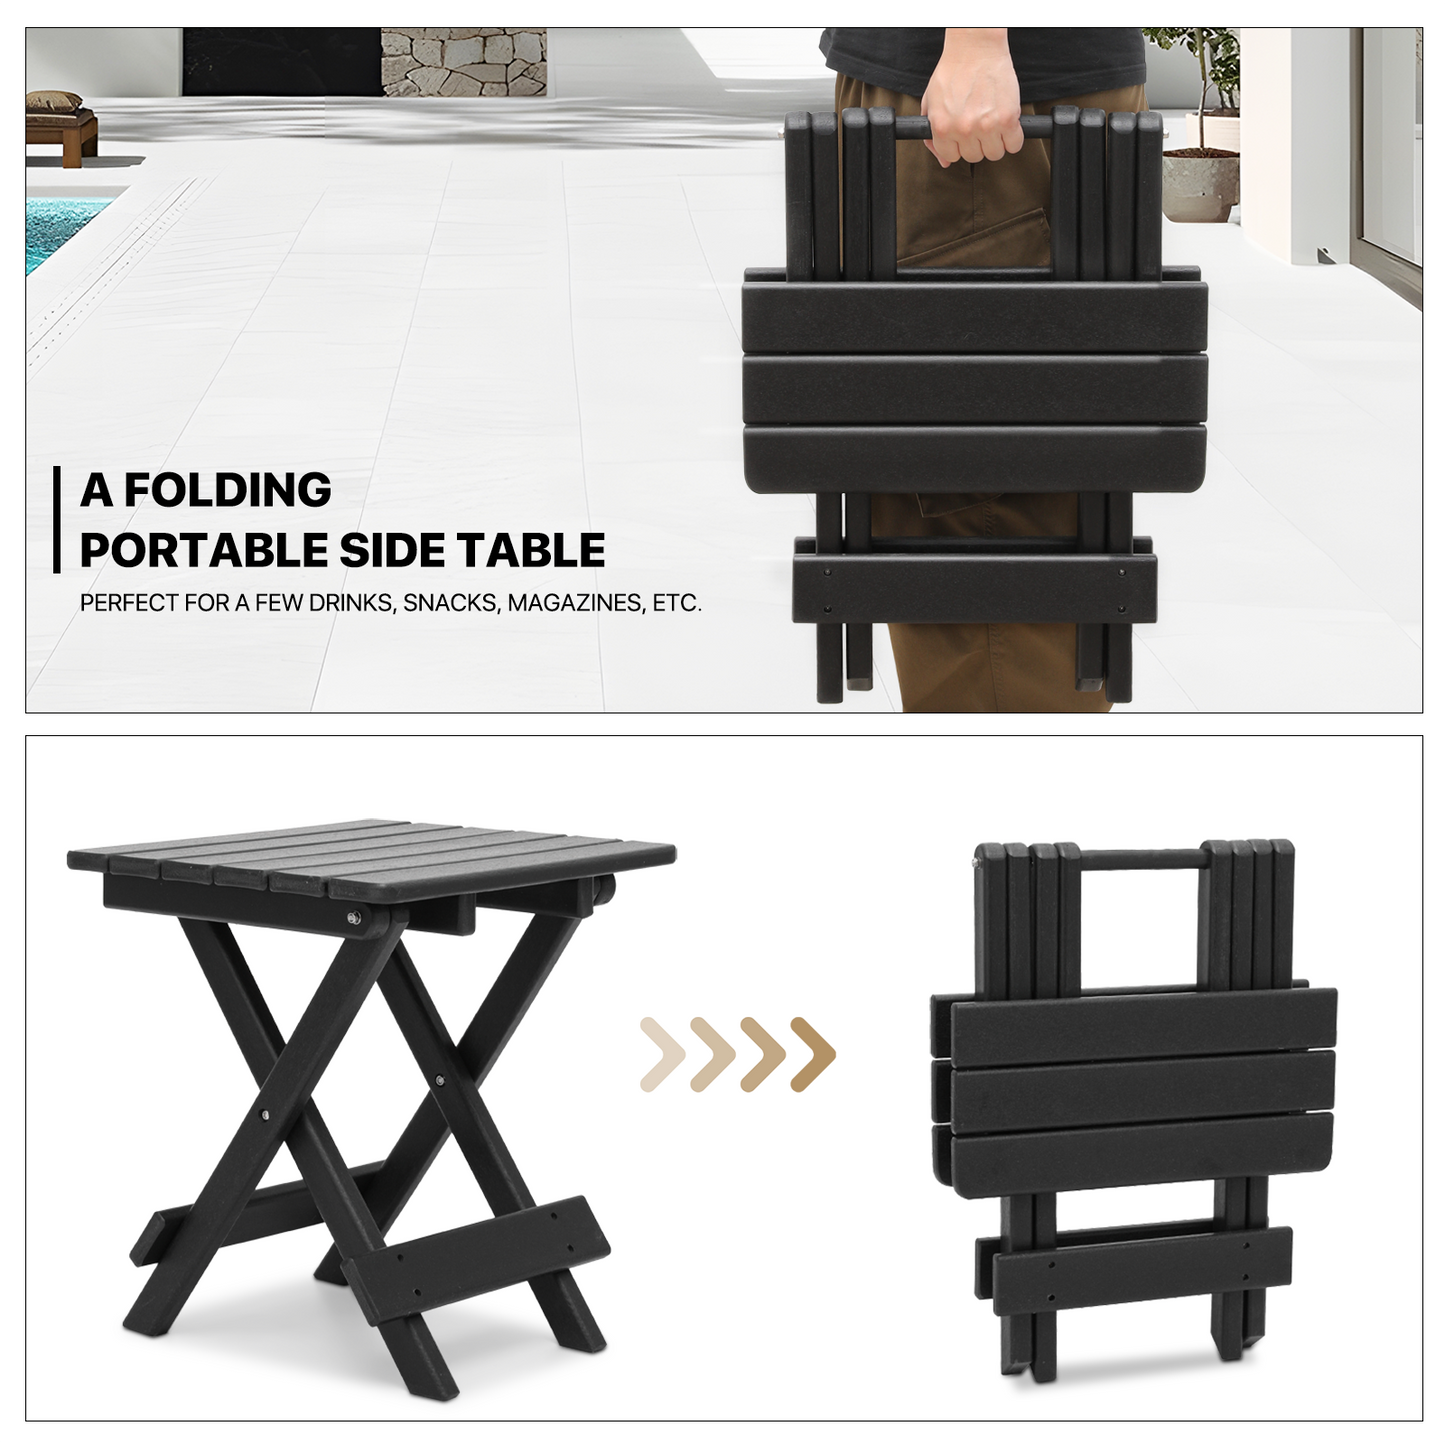 Bistro Set - 2 Rocking Chair & 1 Table